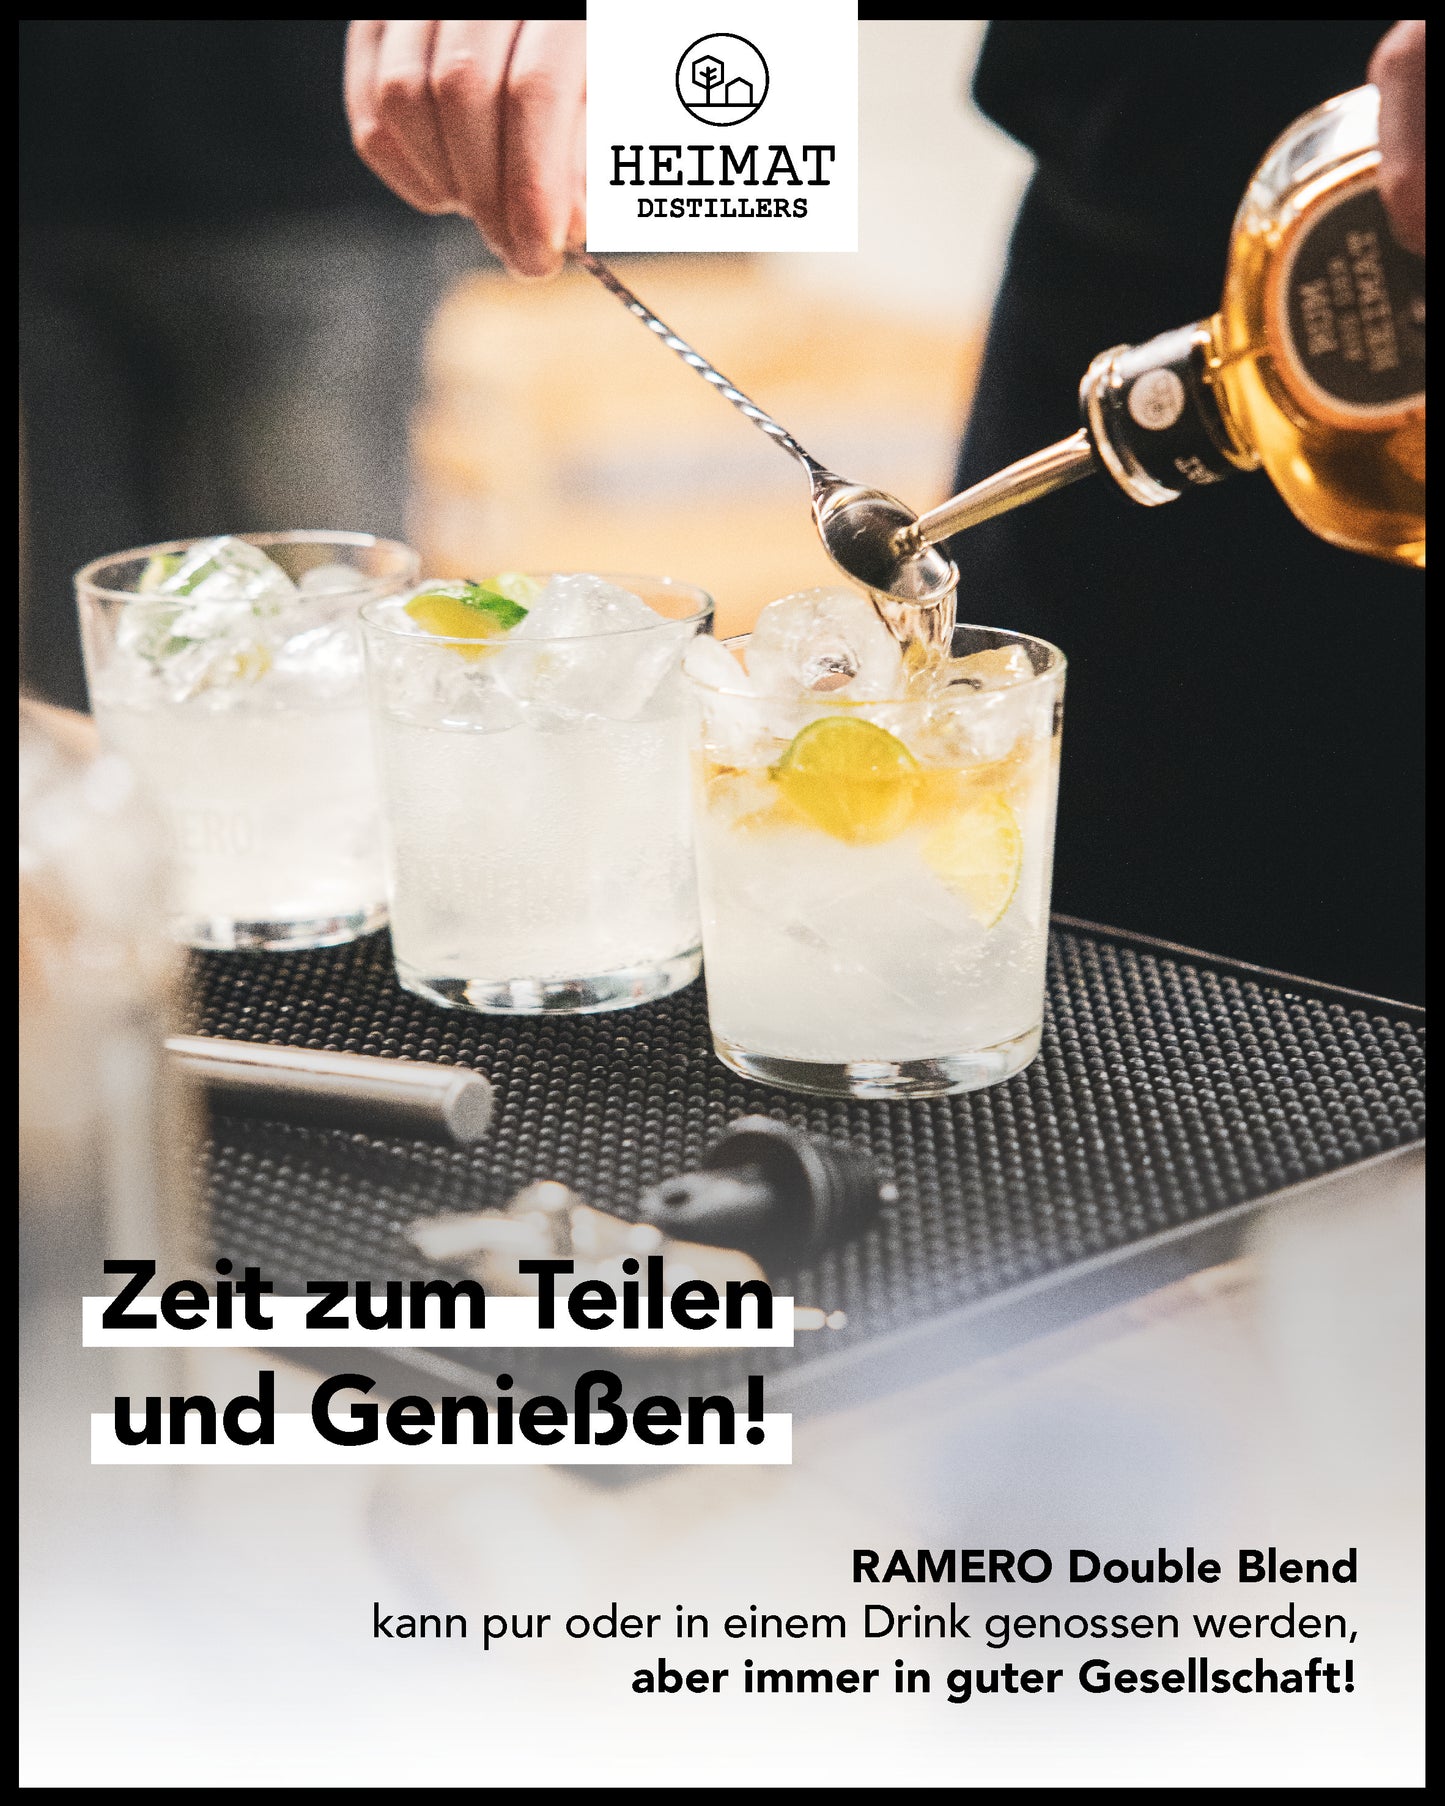 
                  
                    RAMERO Rum Double Blend 500ML
                  
                